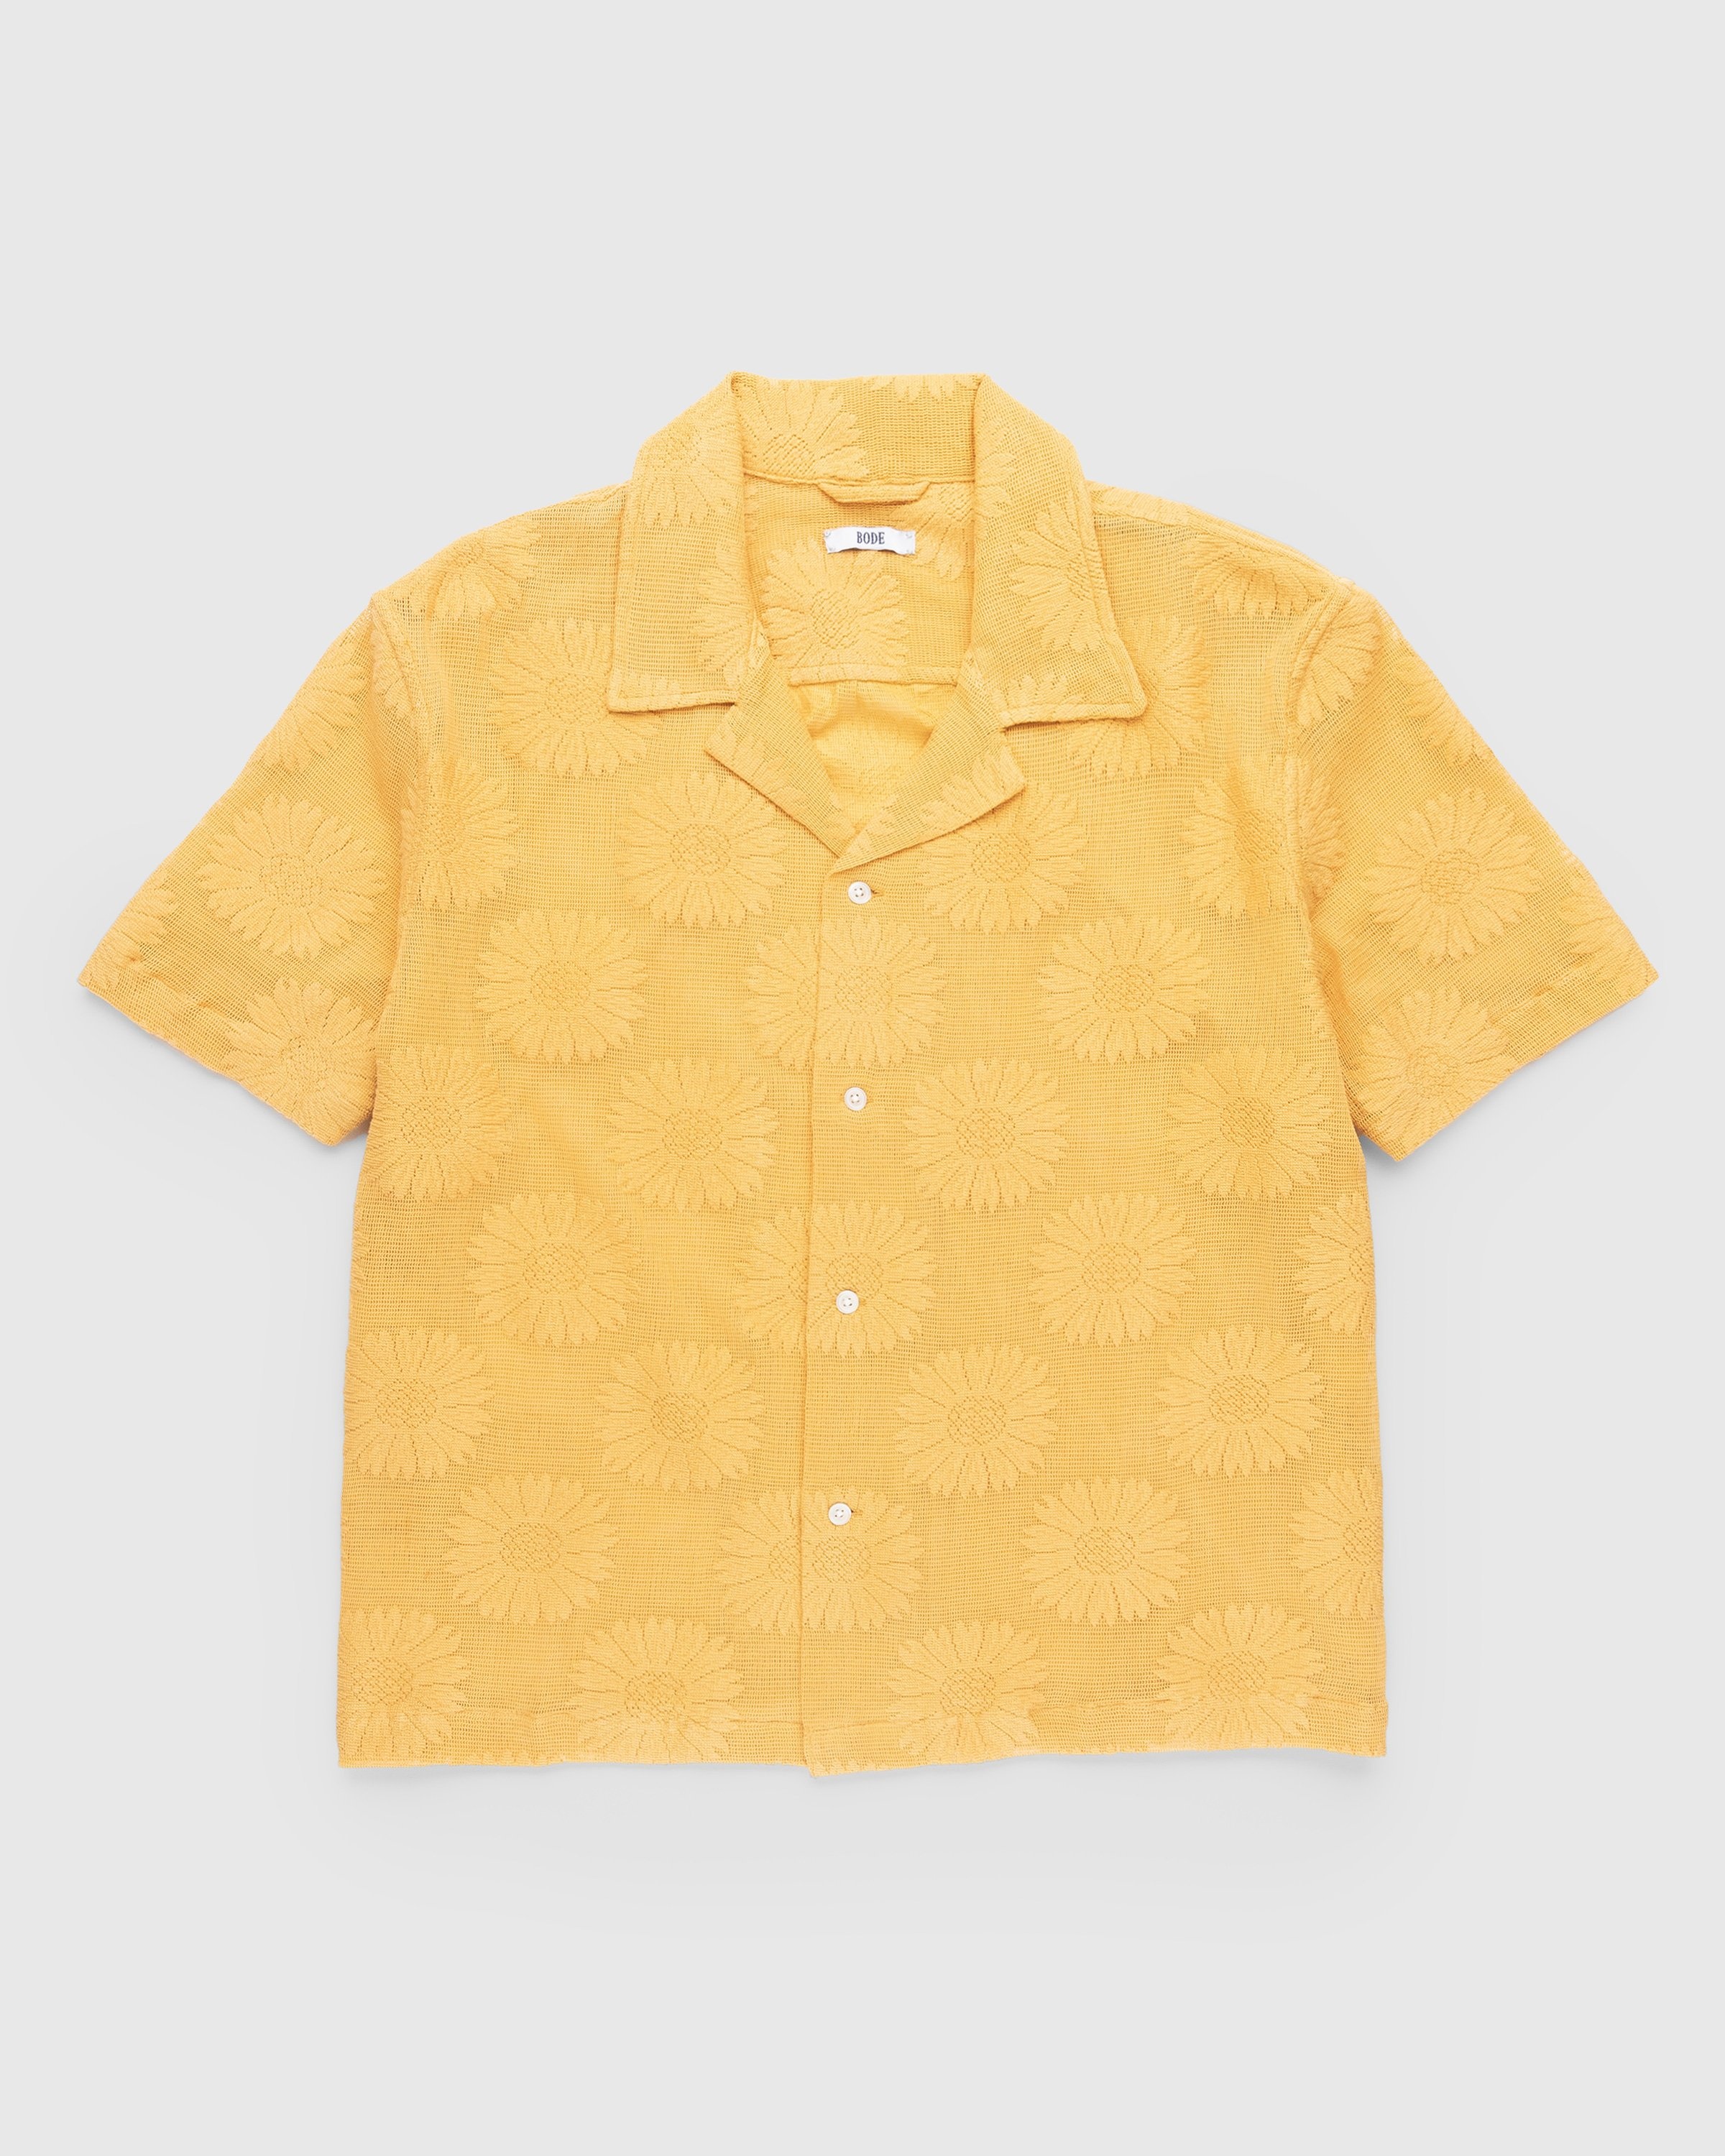 Bode – Sunflower Lace Shortsleeve Shirt Yellow  - Shirts - Yellow - Image 1